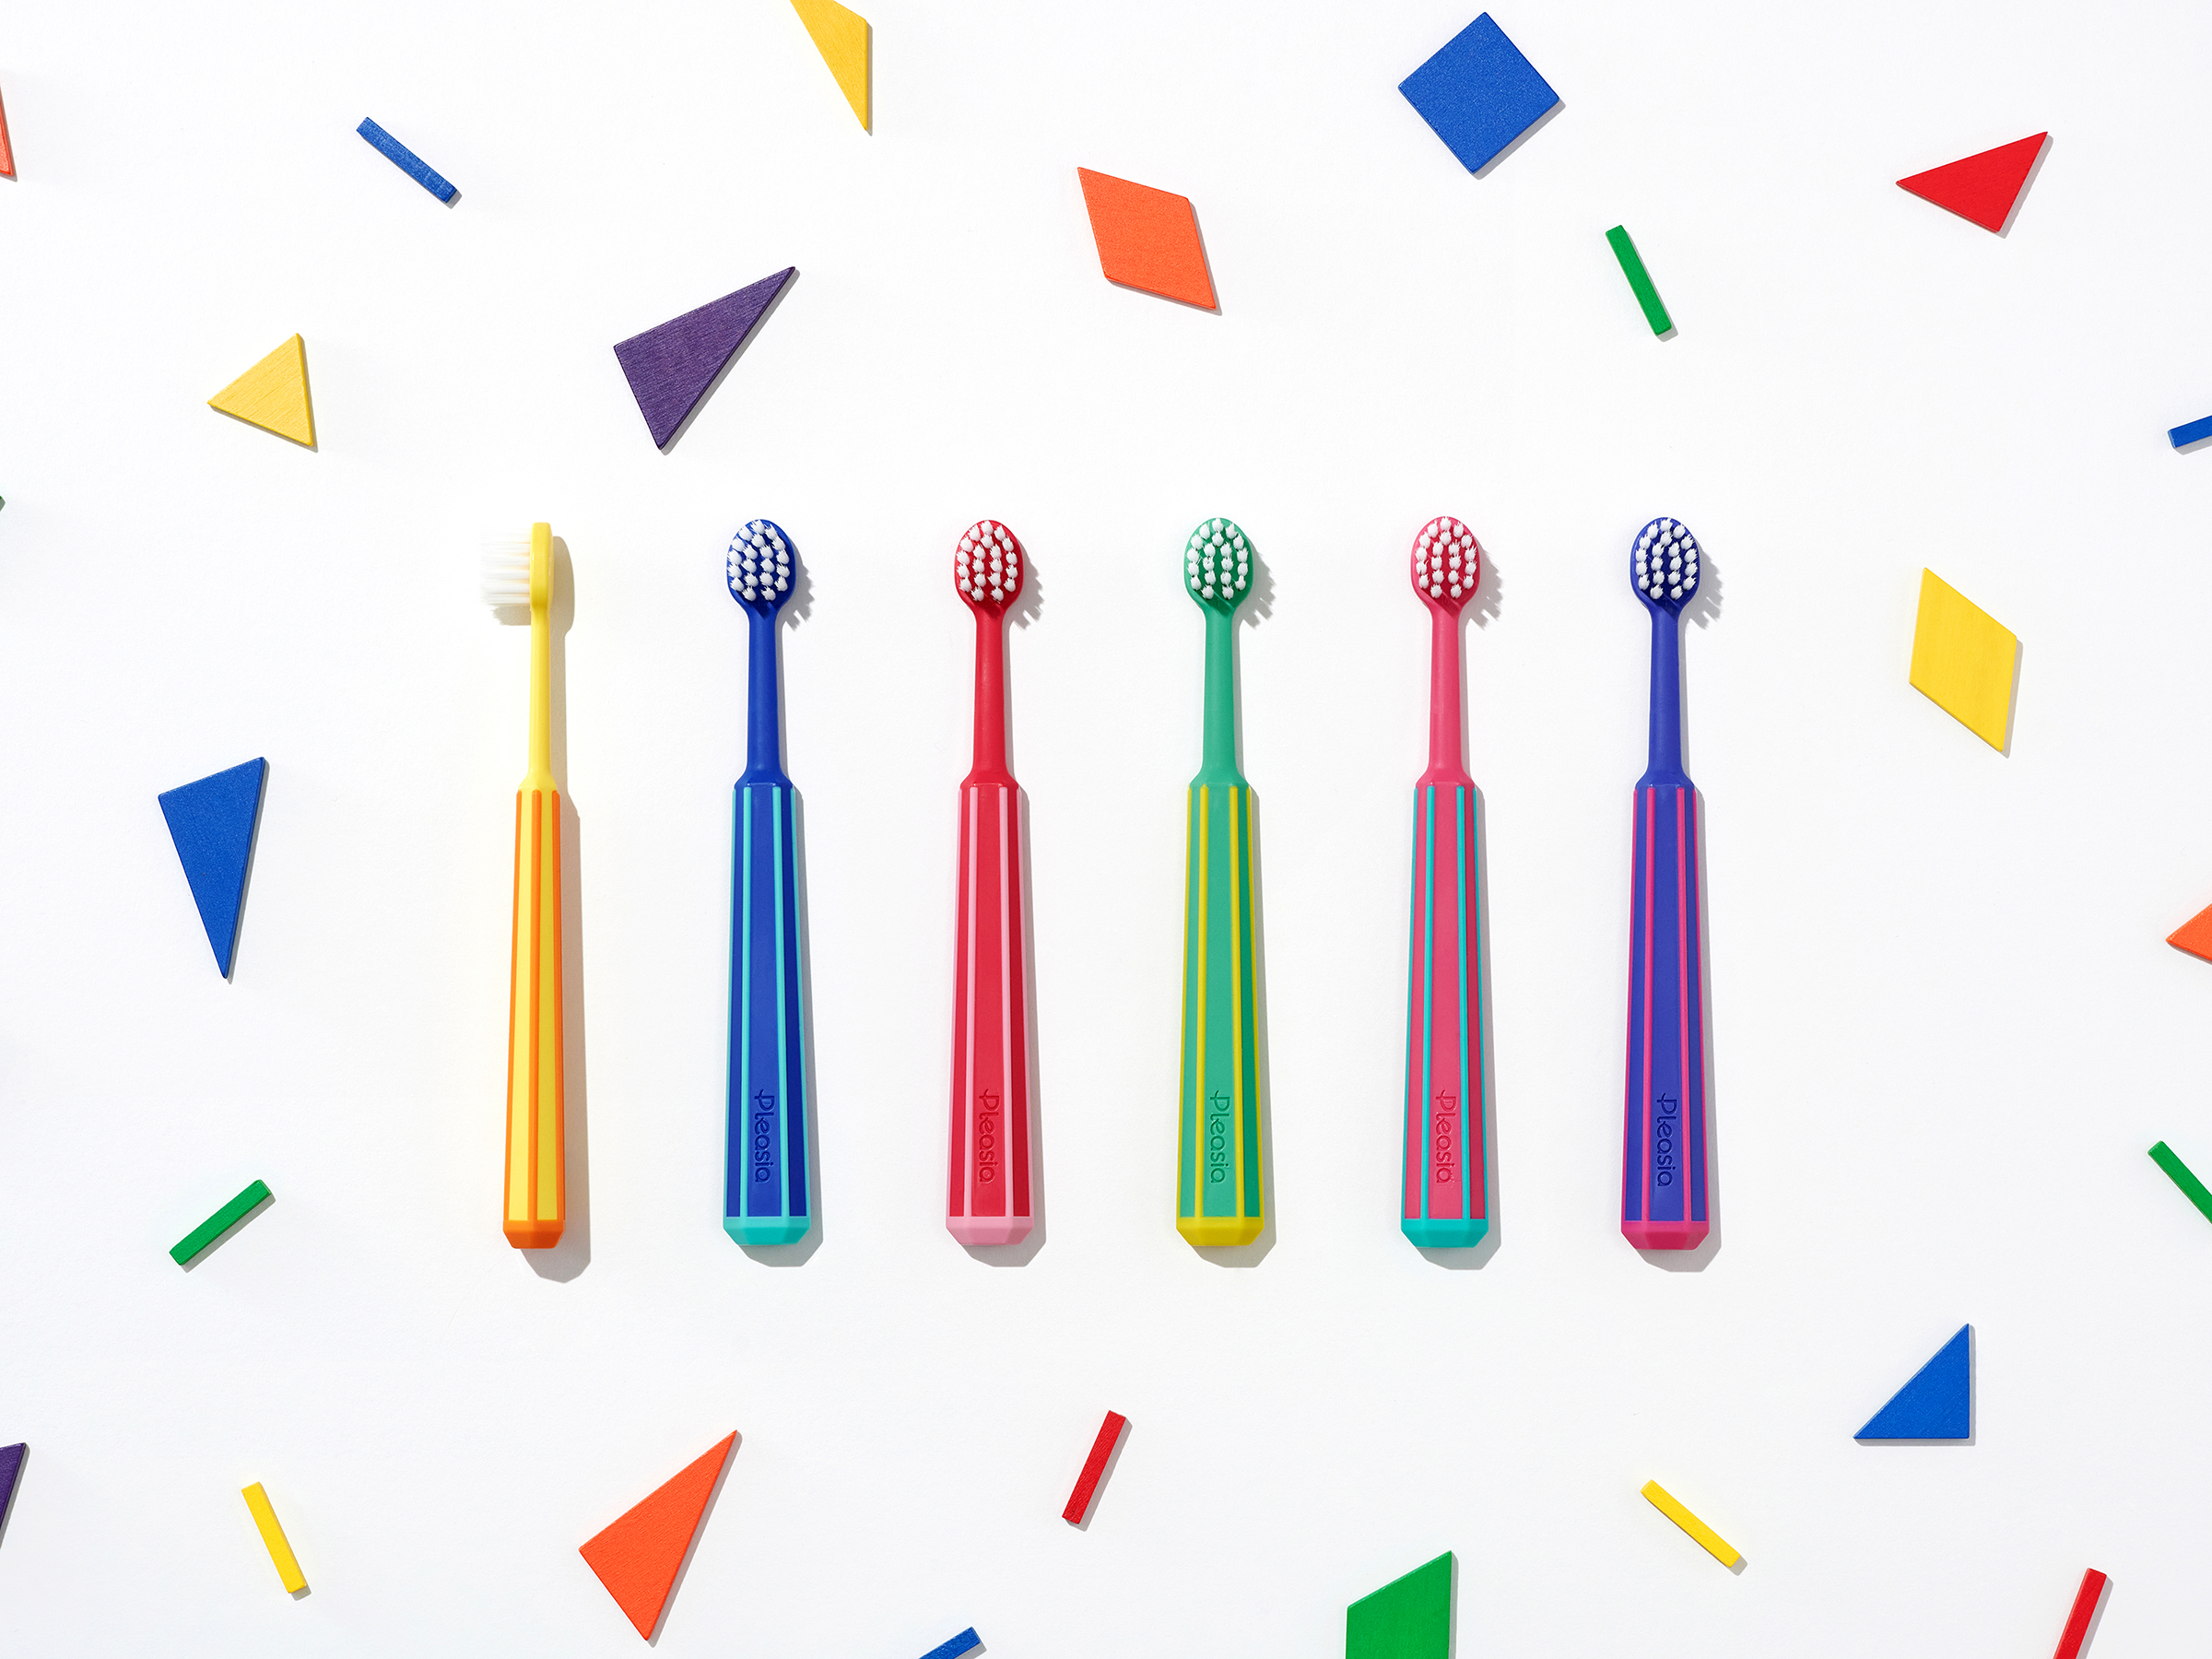 Plesia Kids Color Blocks Toothbrush